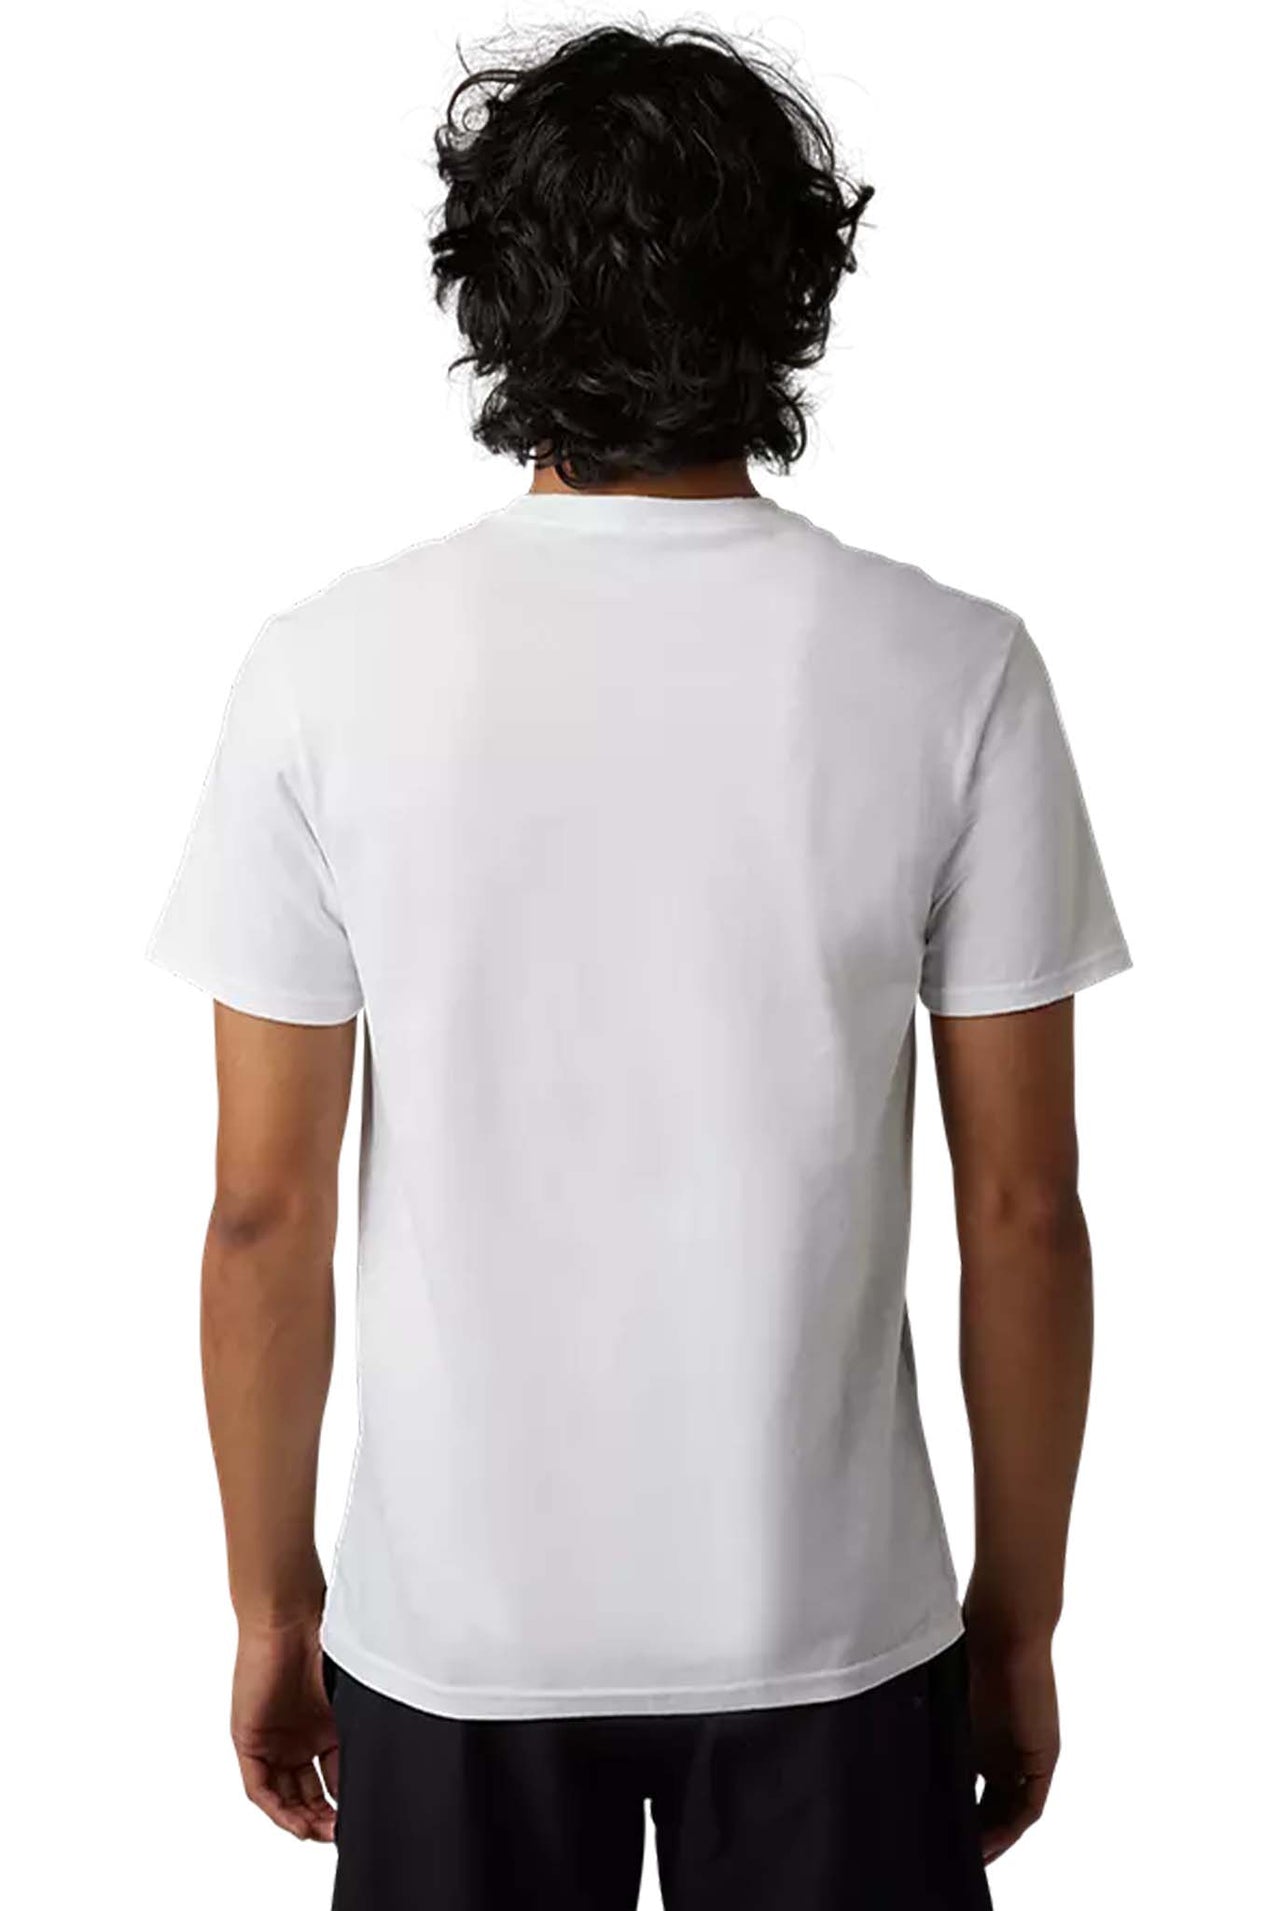 Camiseta Fox Syz Blanco